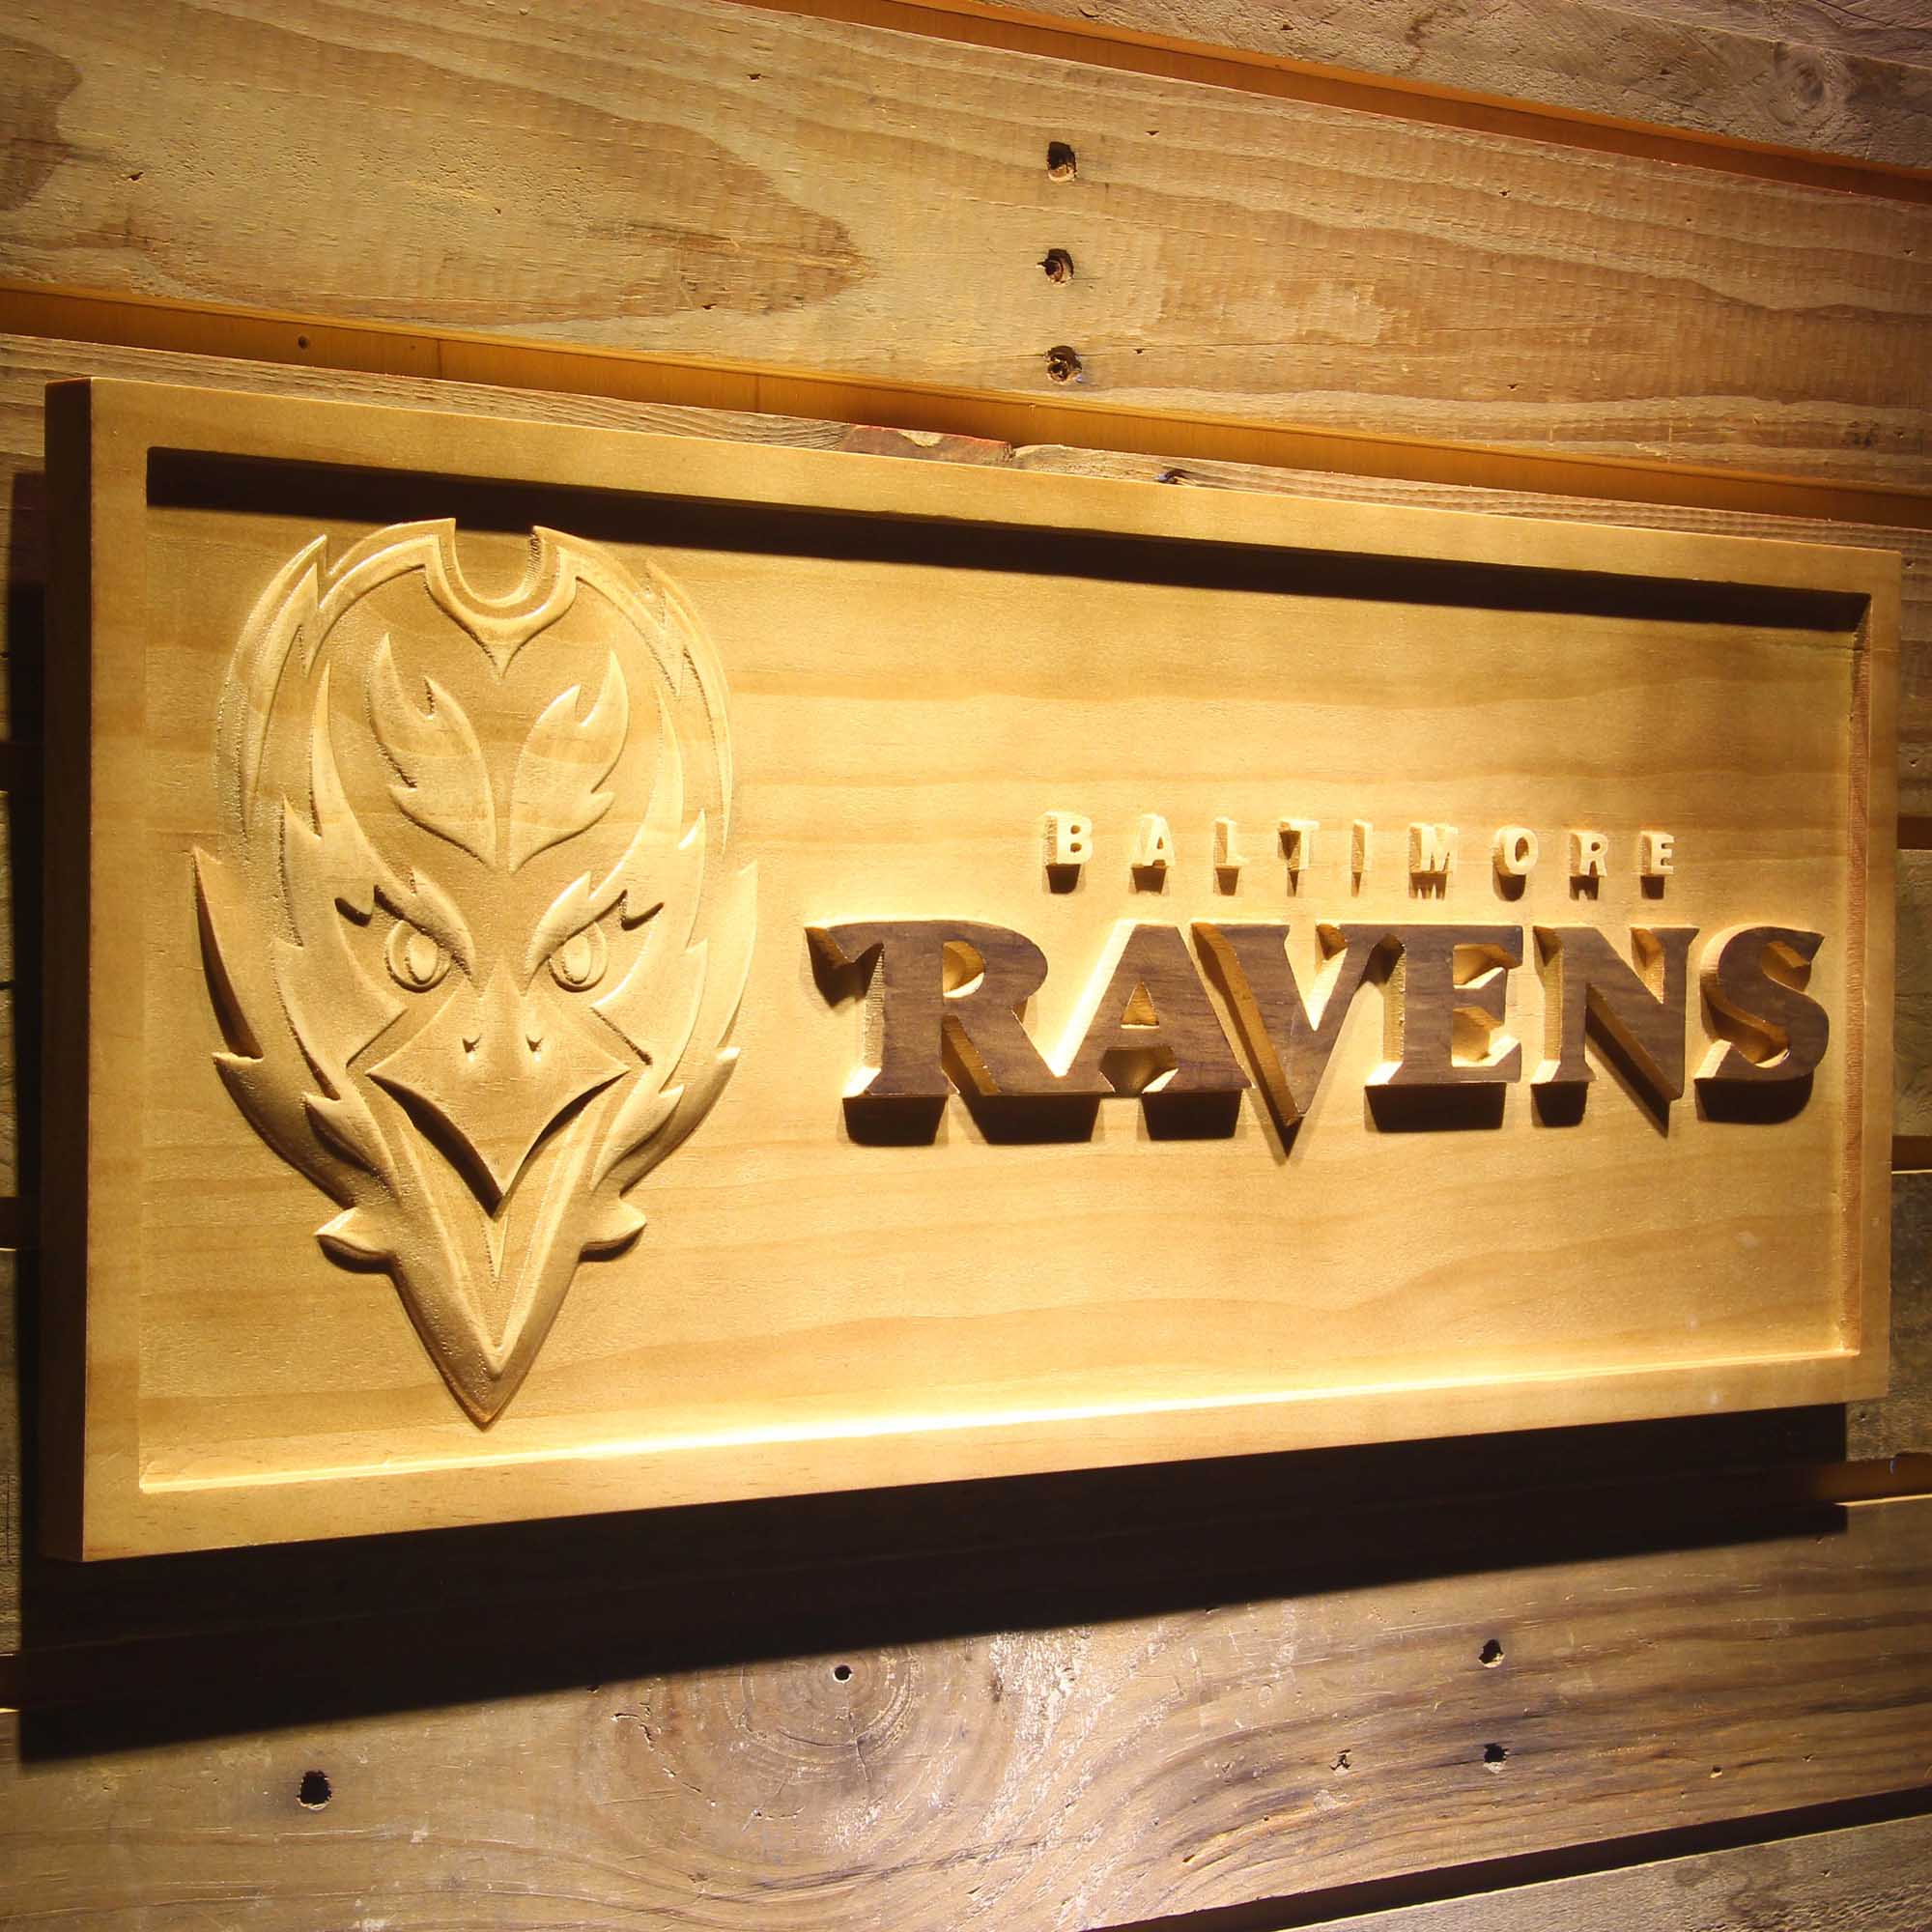 Baltimore Ravens  3D Solid Wooden Craving Sign